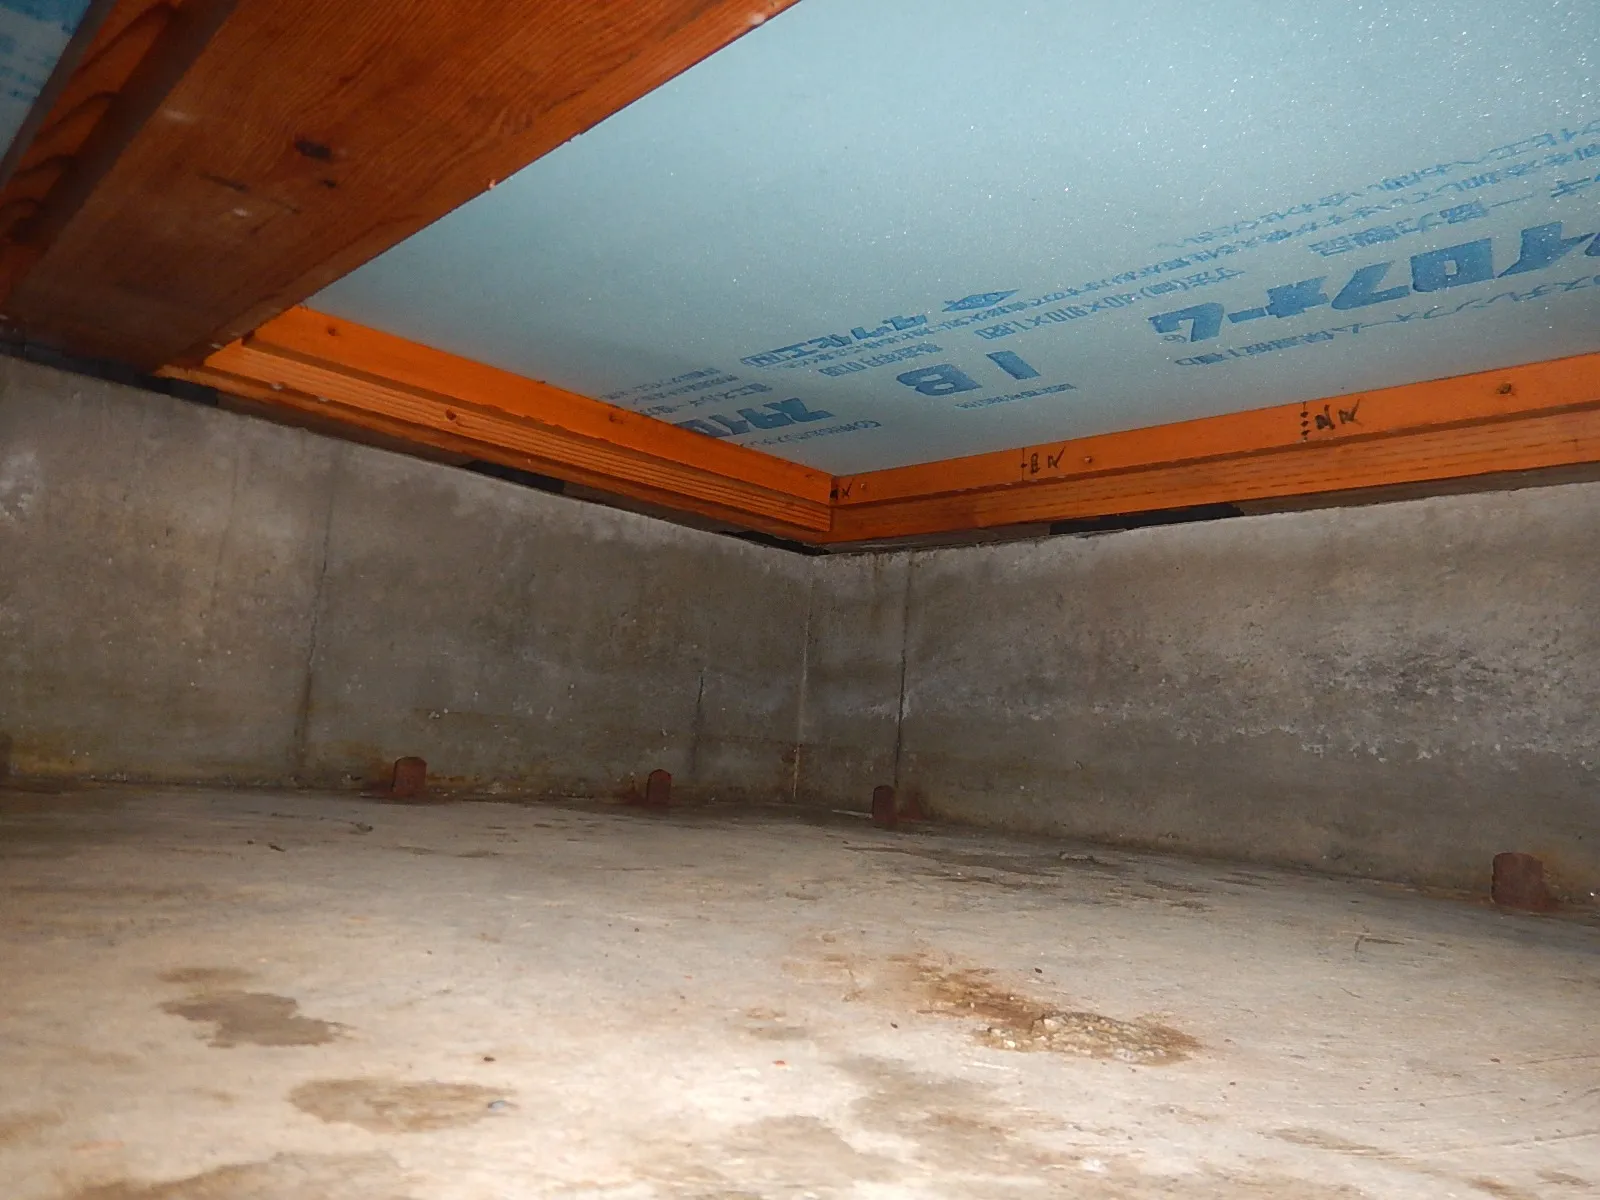 住宅床下漏水事故後の防カビ・消臭工事